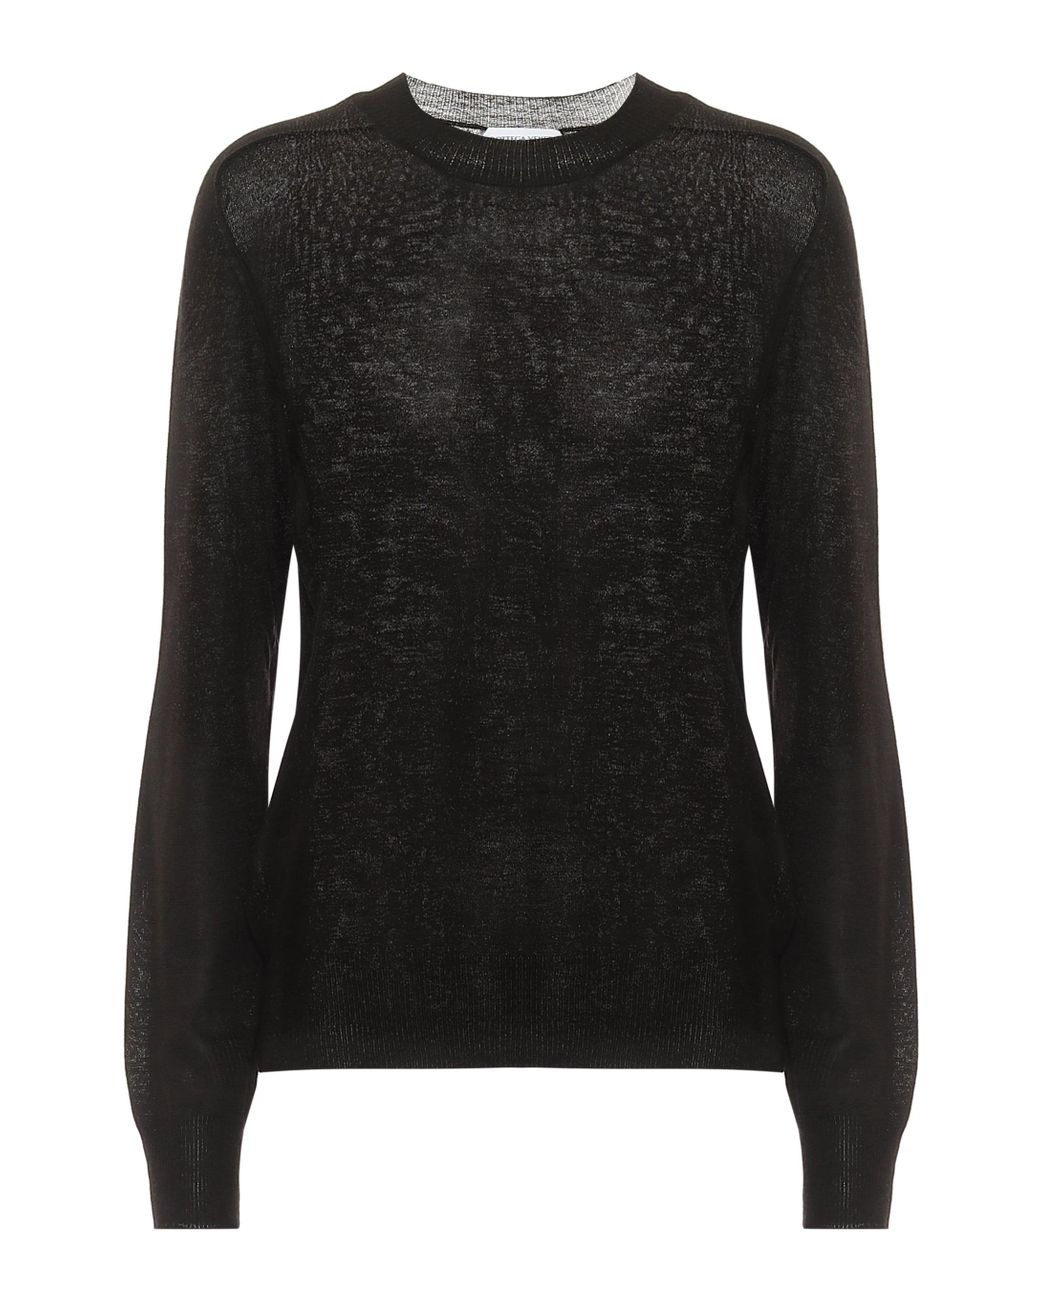 Bottega Veneta Cashmere Sweater in Brown (Black) - Lyst